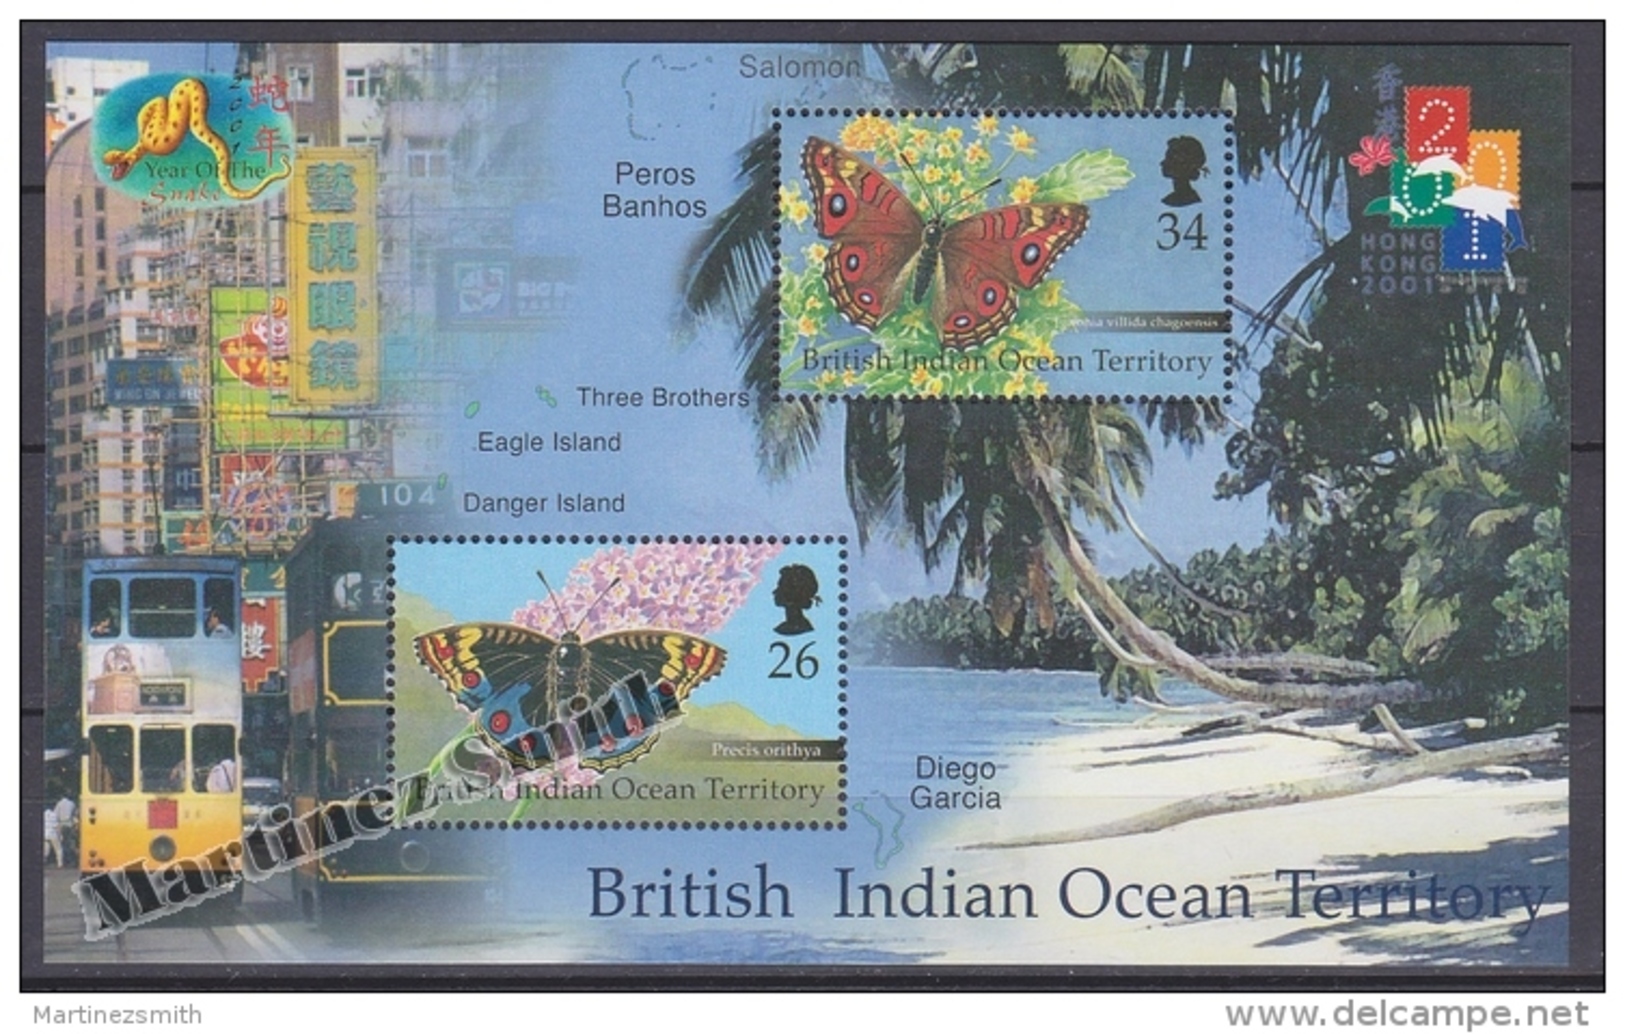 British Indian Ocean 2001 Yvert BF 15, Hong Kong 2001 Philatelic Exhibition, Butterflies - Miniature Sheet- MNH - Britisches Territorium Im Indischen Ozean